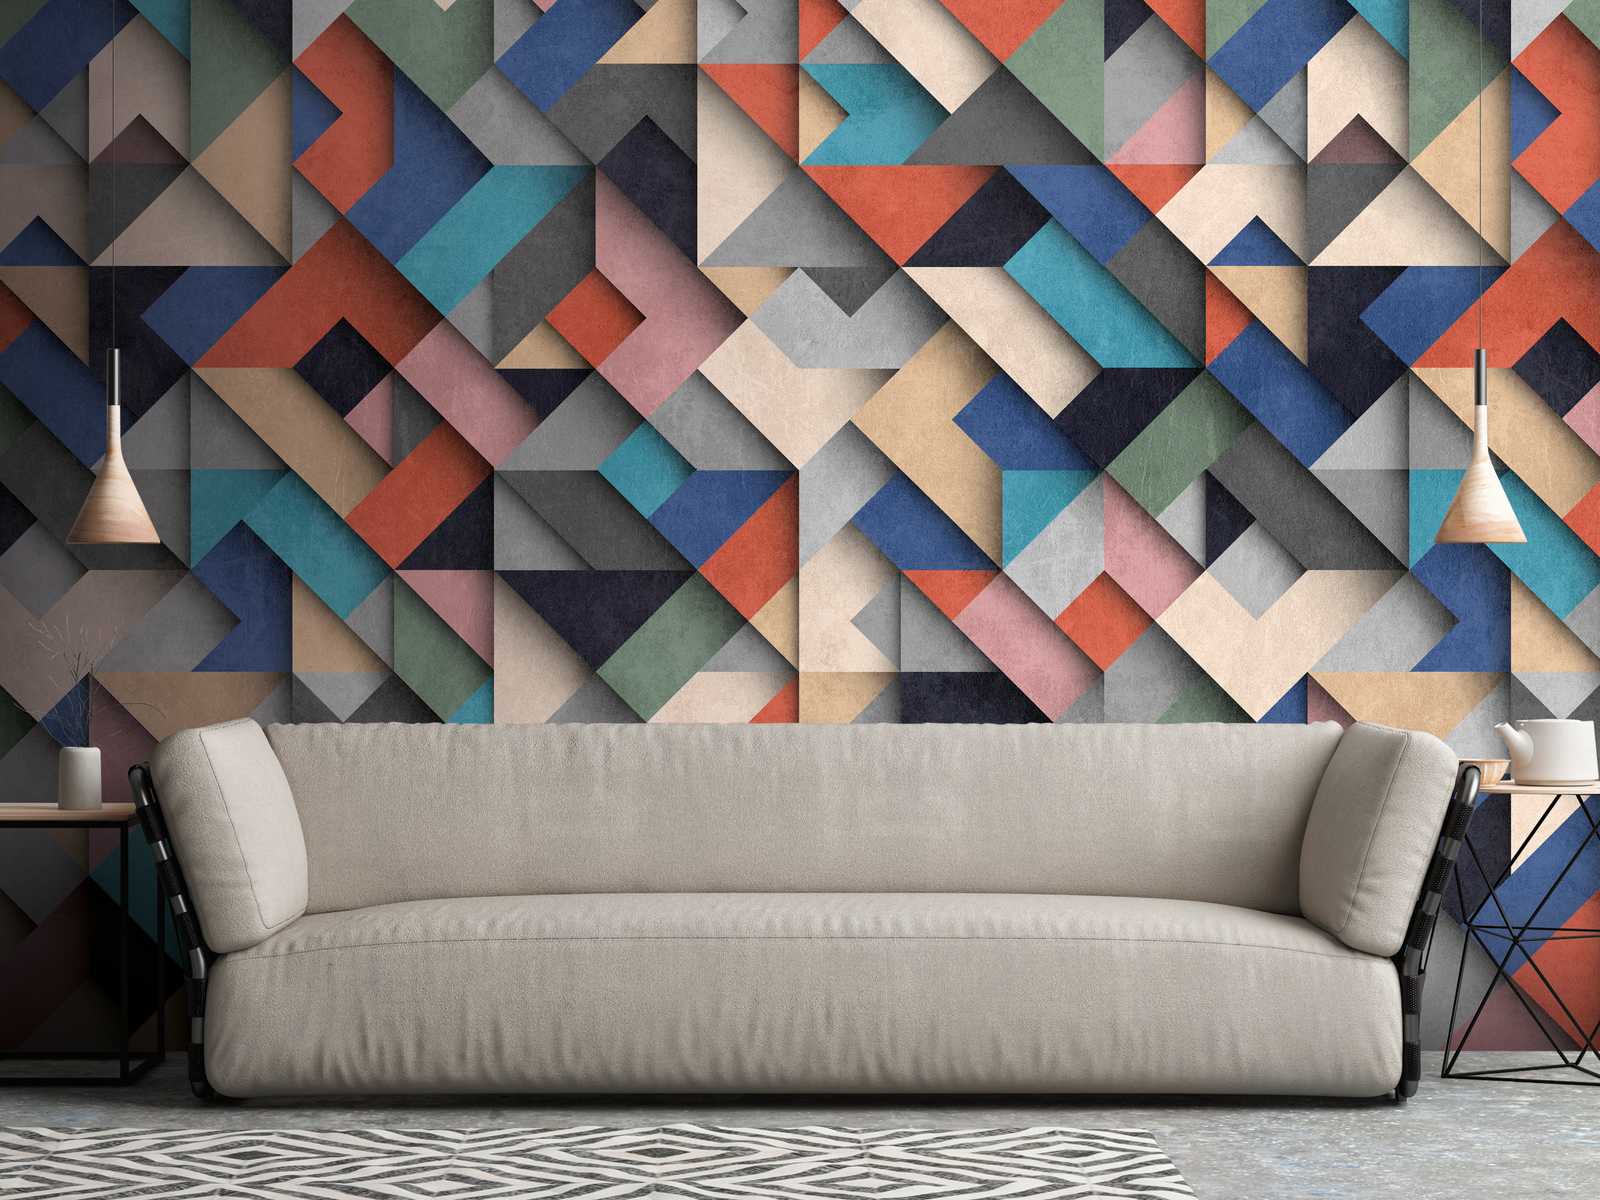             Wallpaper novelty | 3D motif wallpaper with geometric colour block design
        